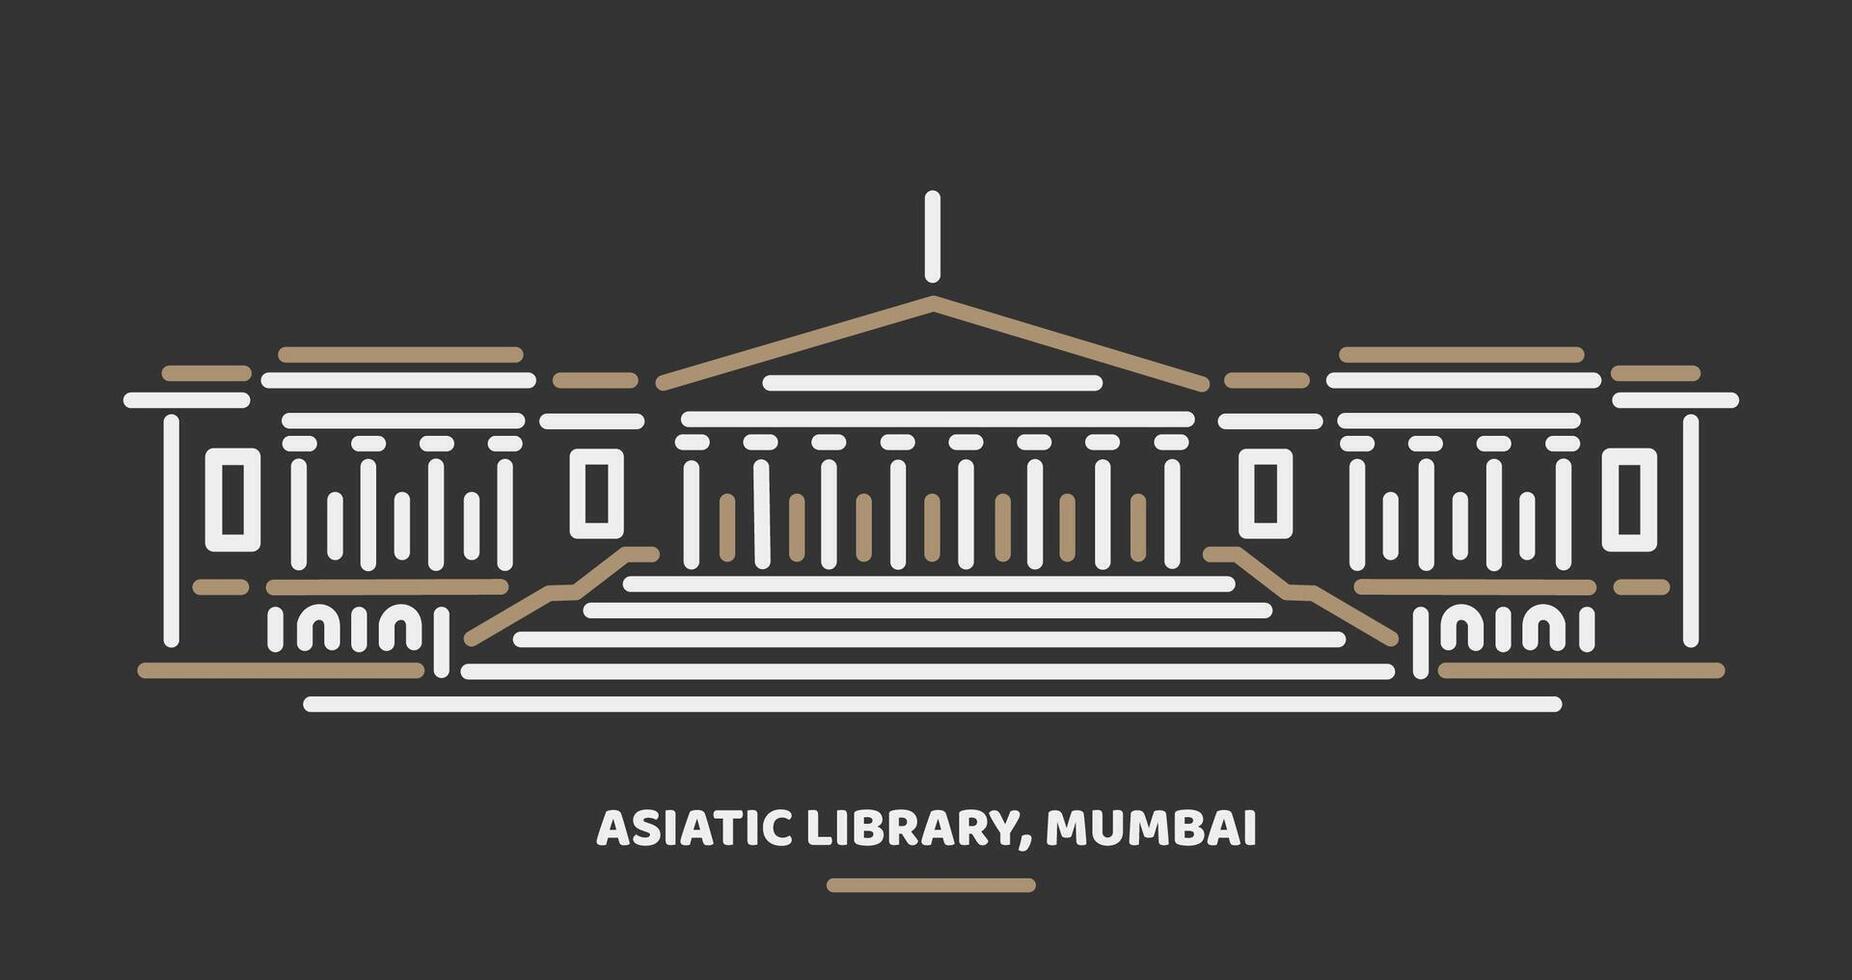 asiatic samhälle bibliotek, mumbai byggnad illustration. vektor